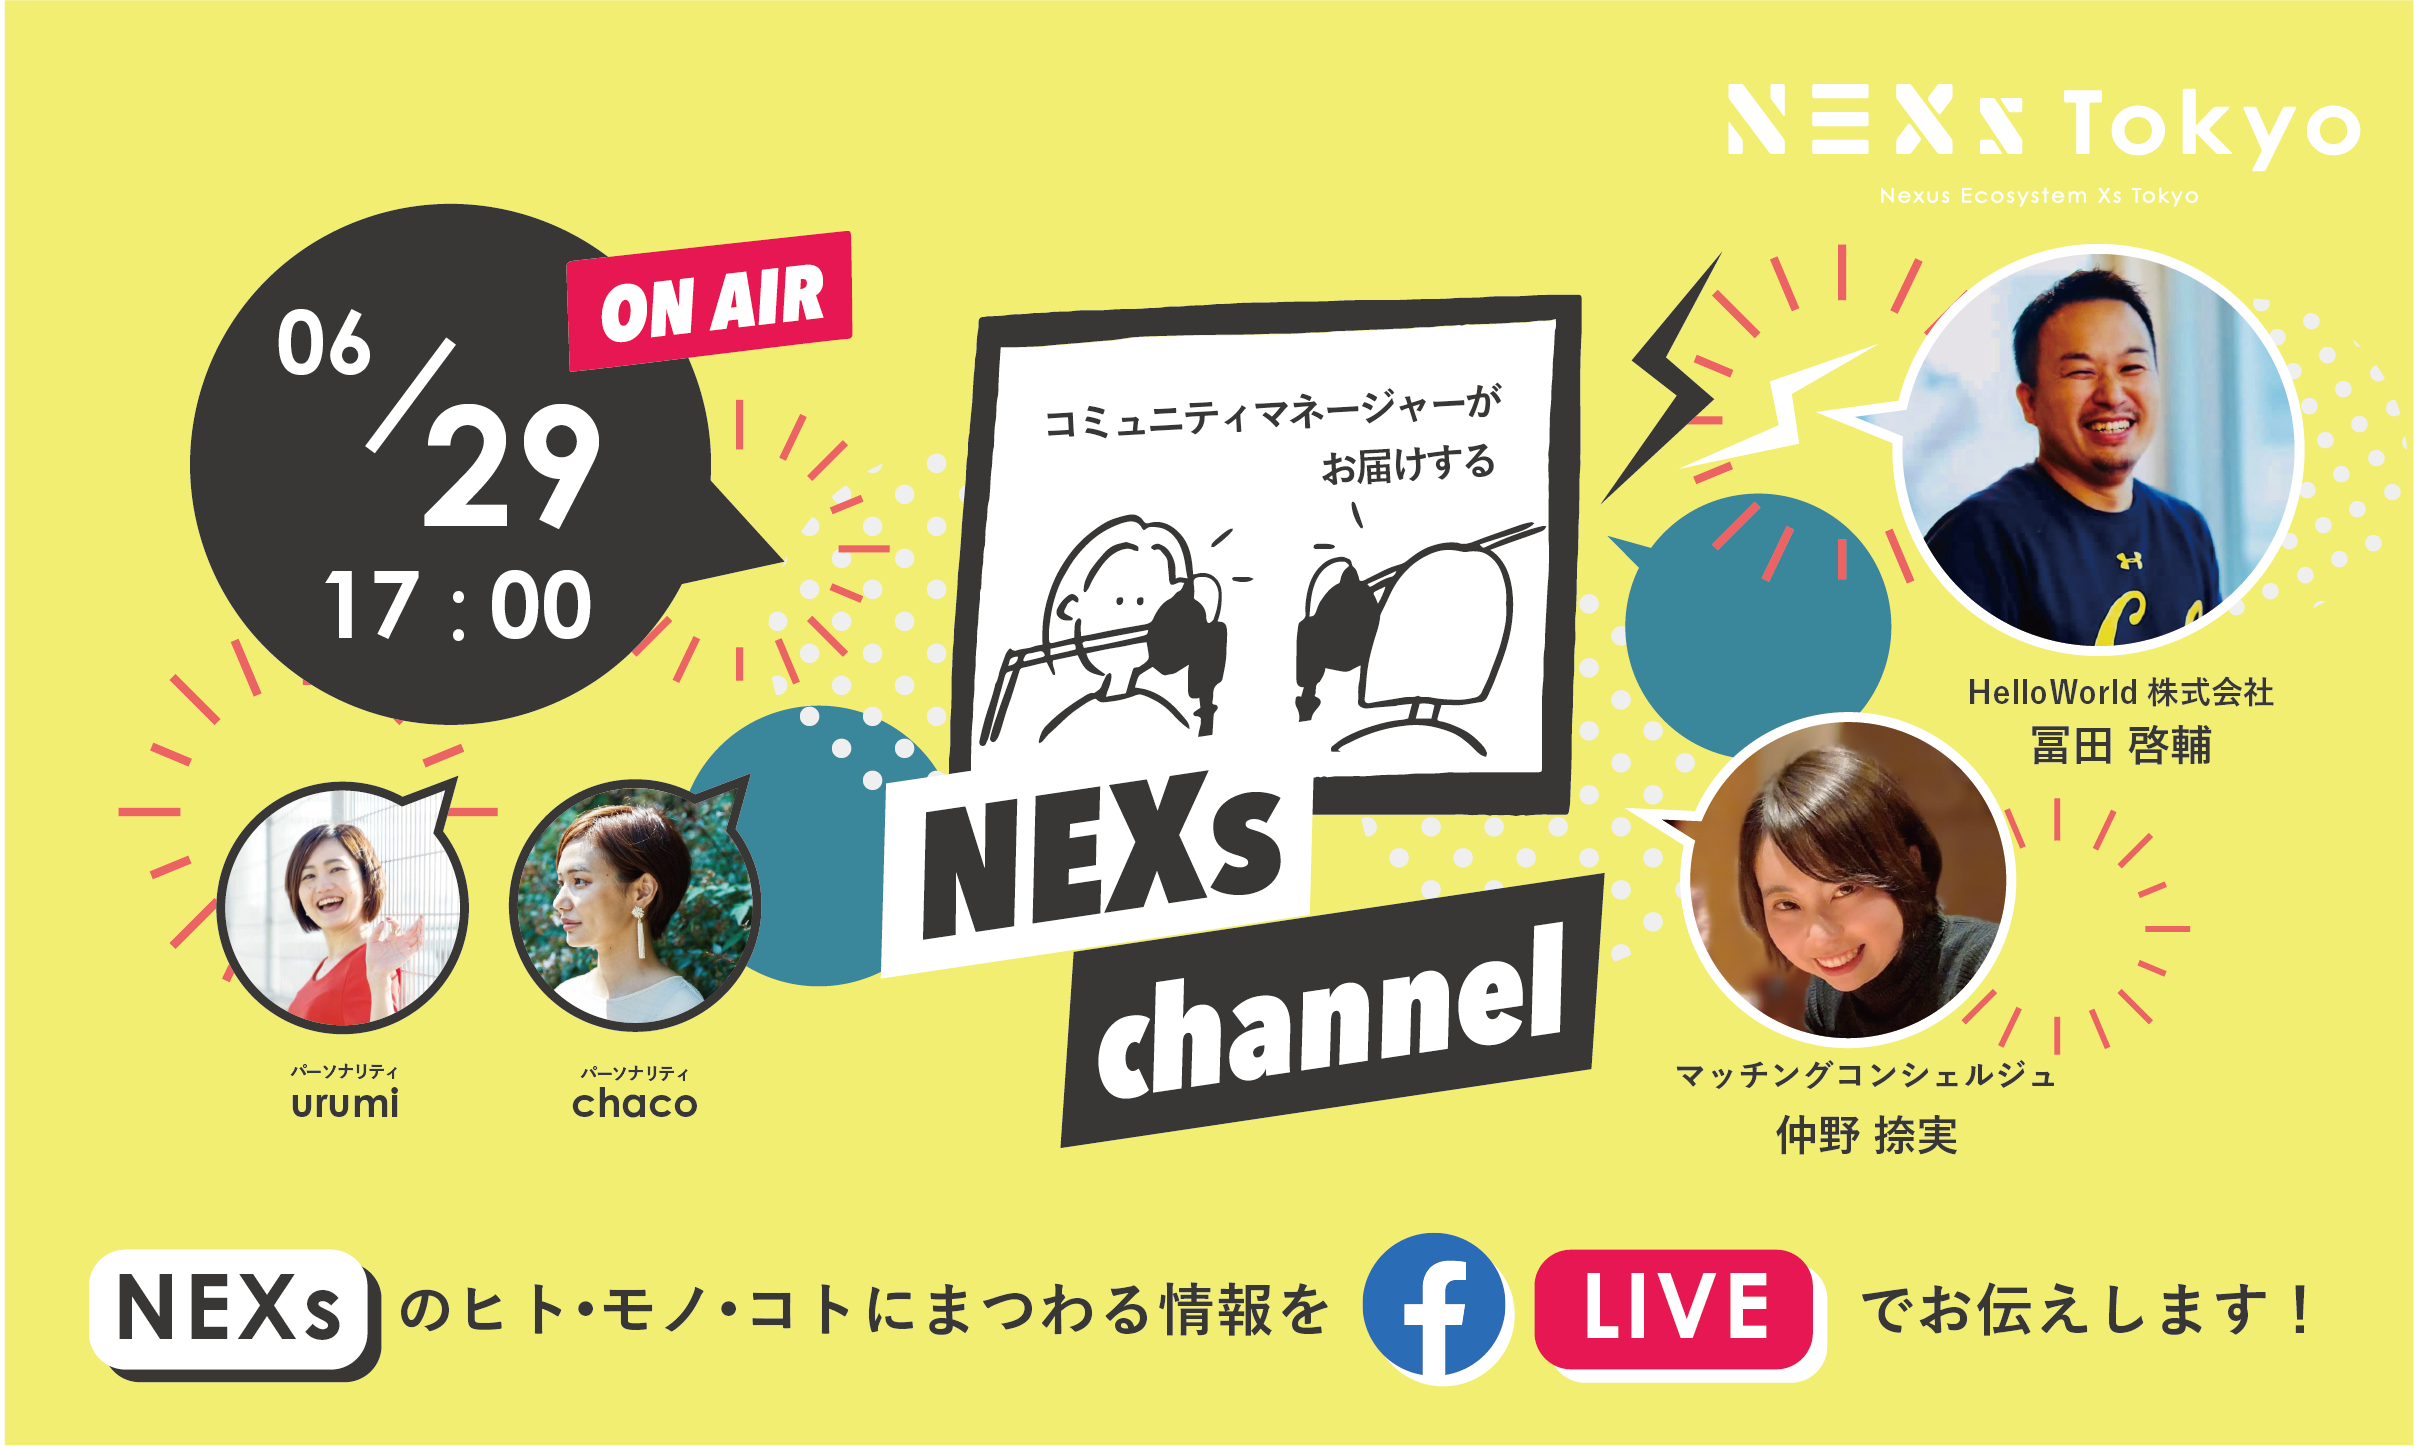 NEXs channel #18 -NEXs Tokyoのヒト・モノ・コトを特設ラジオブースから生放送でお届け！-